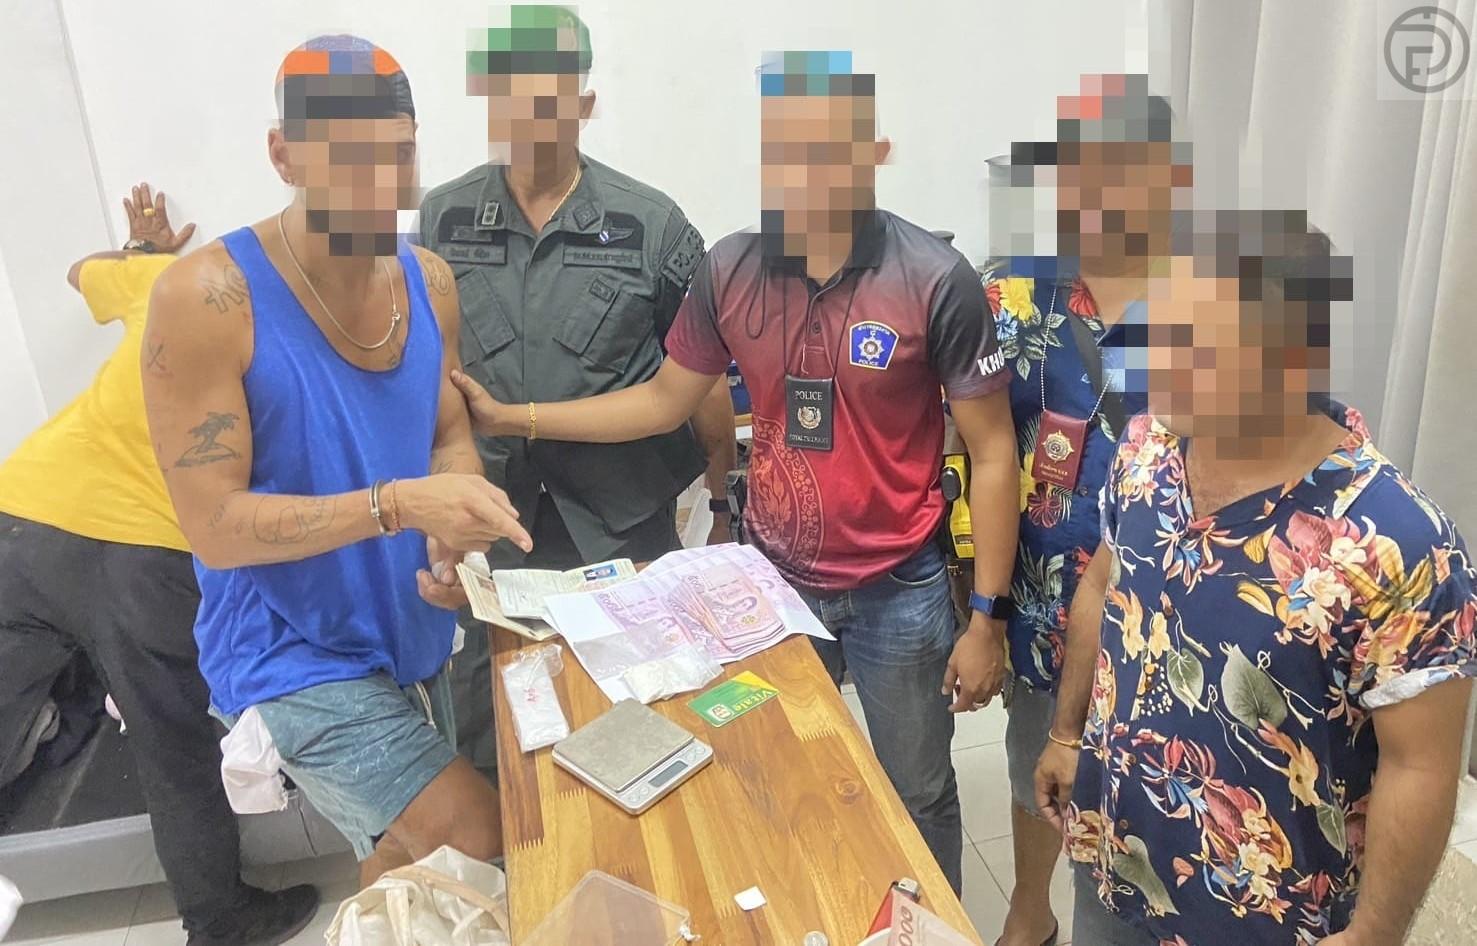 Француз арестован в баре на острове Пханган по подозрению в продаже экстази и кокаина туристам